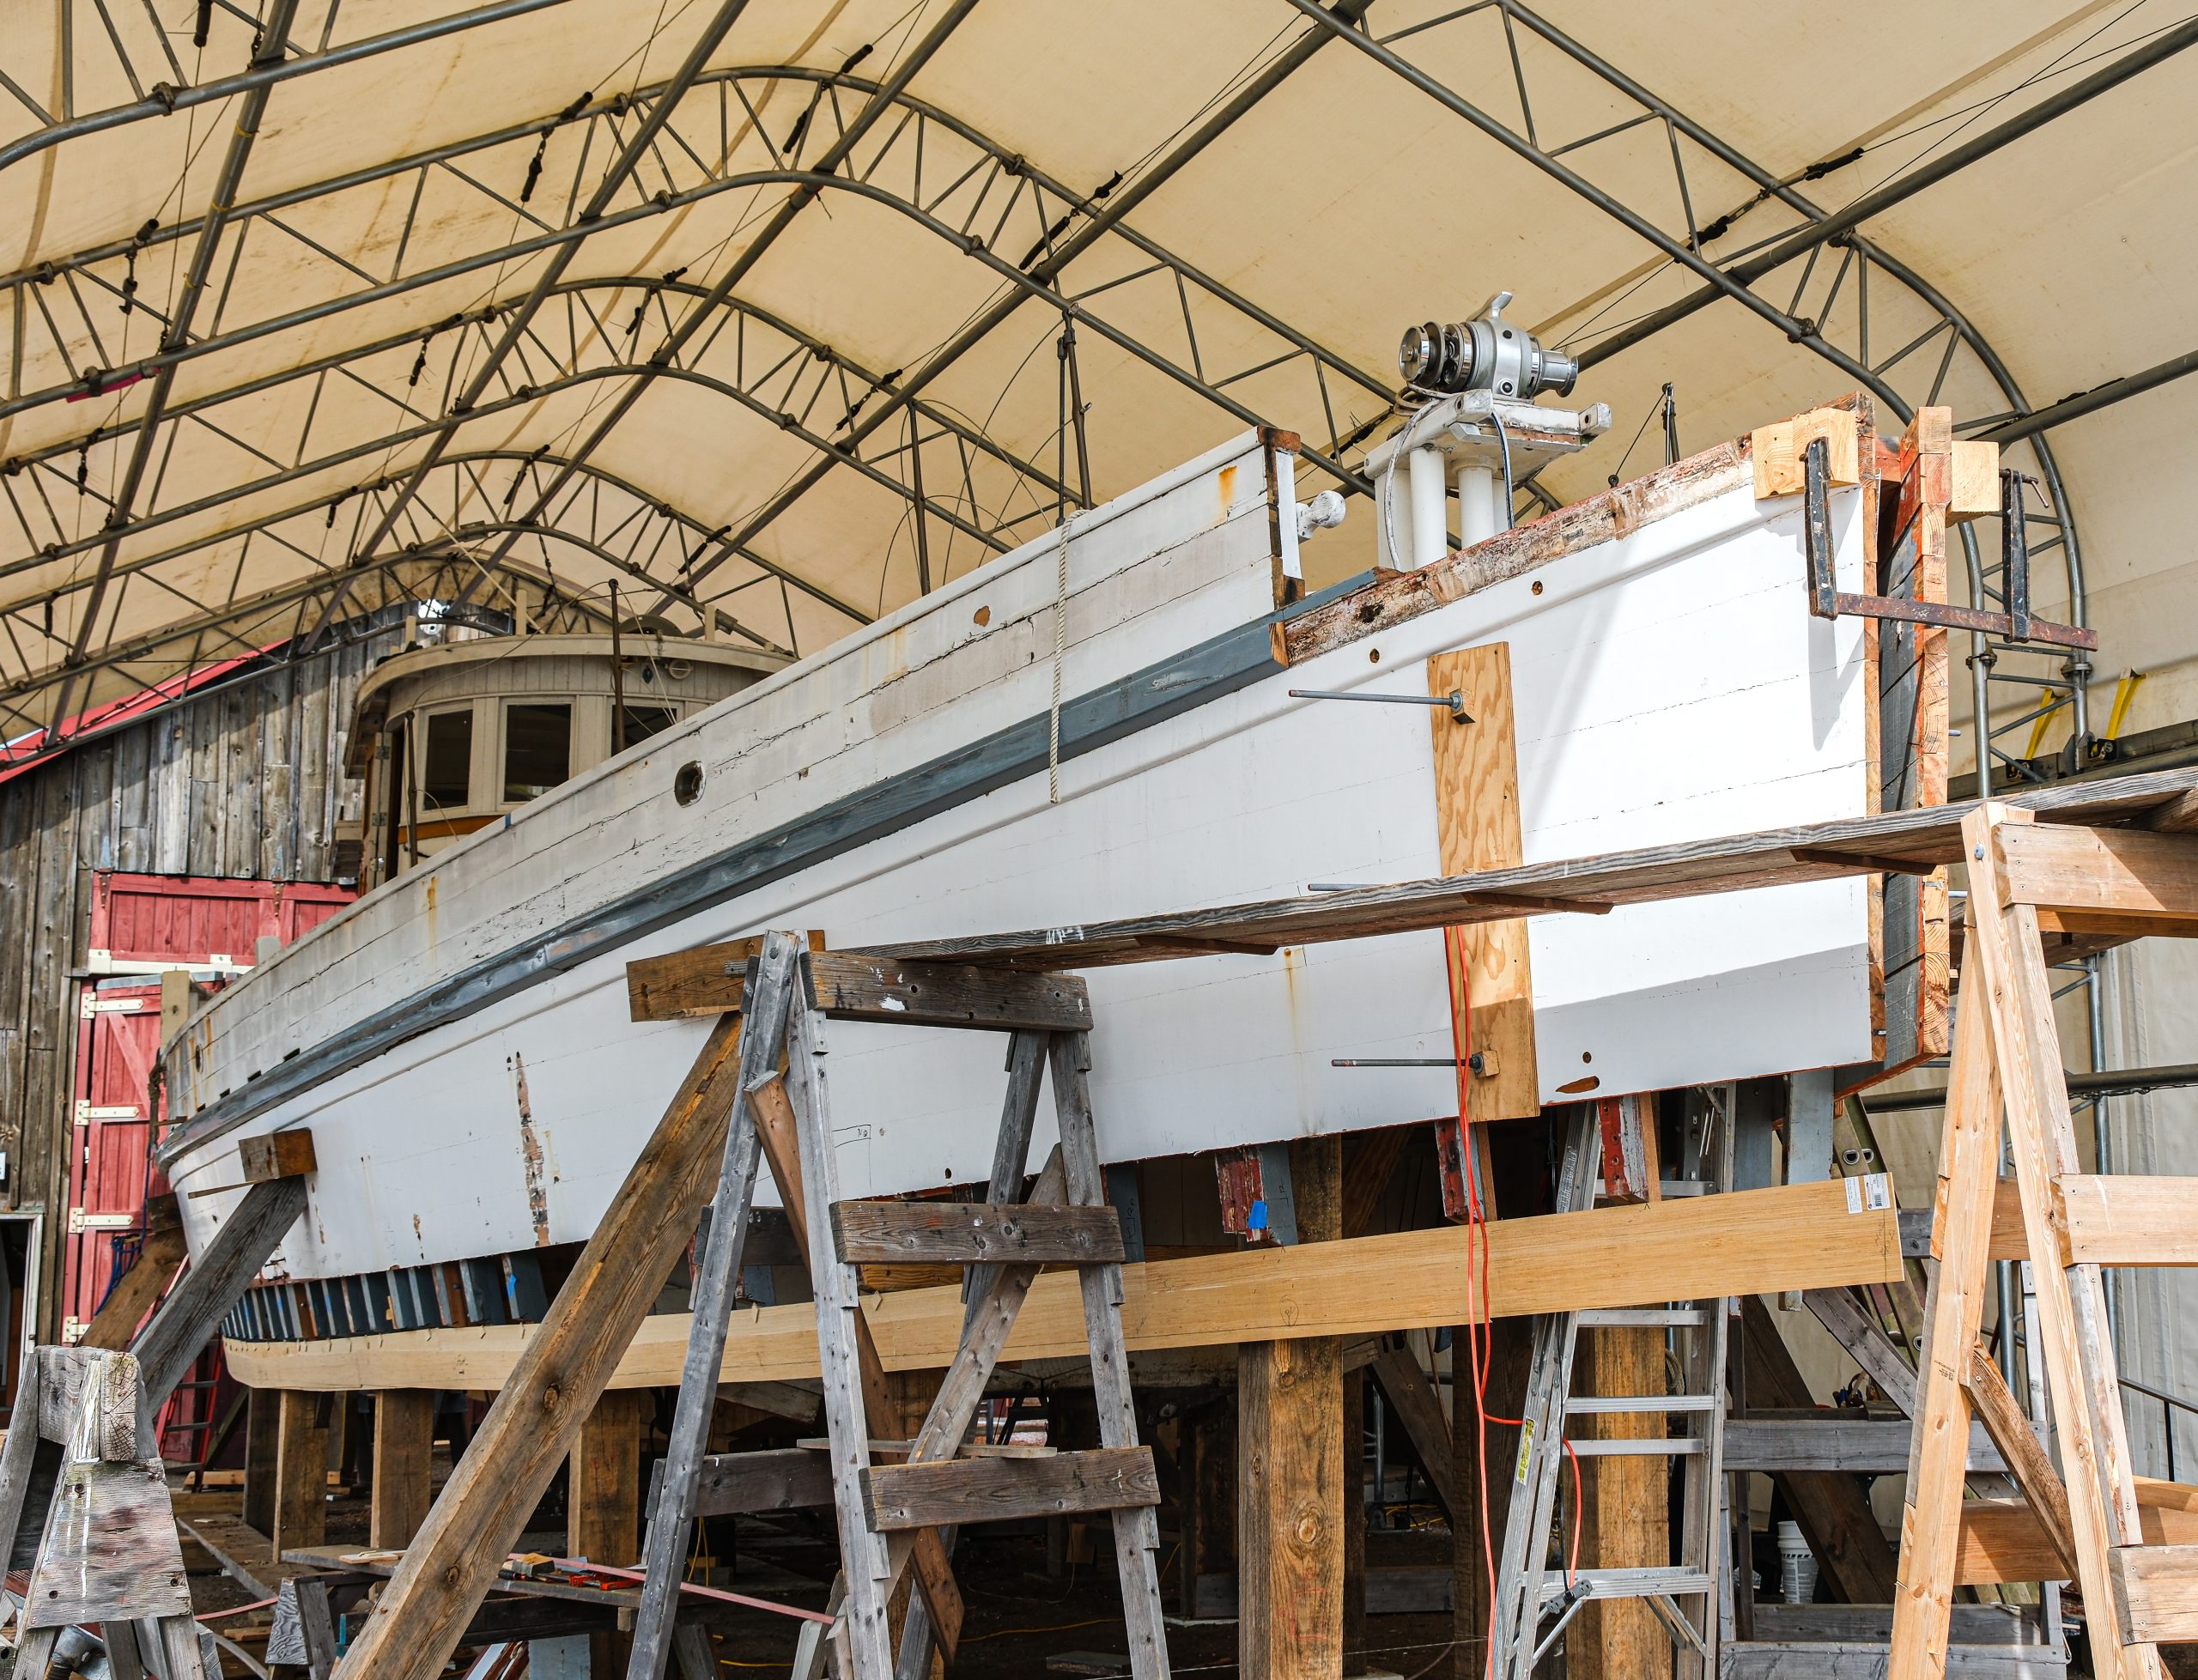 Chesapeake buyboat Winnie Estelle is undergoing a major refit in the CBMM Shipyard. (Photo by George Sass)